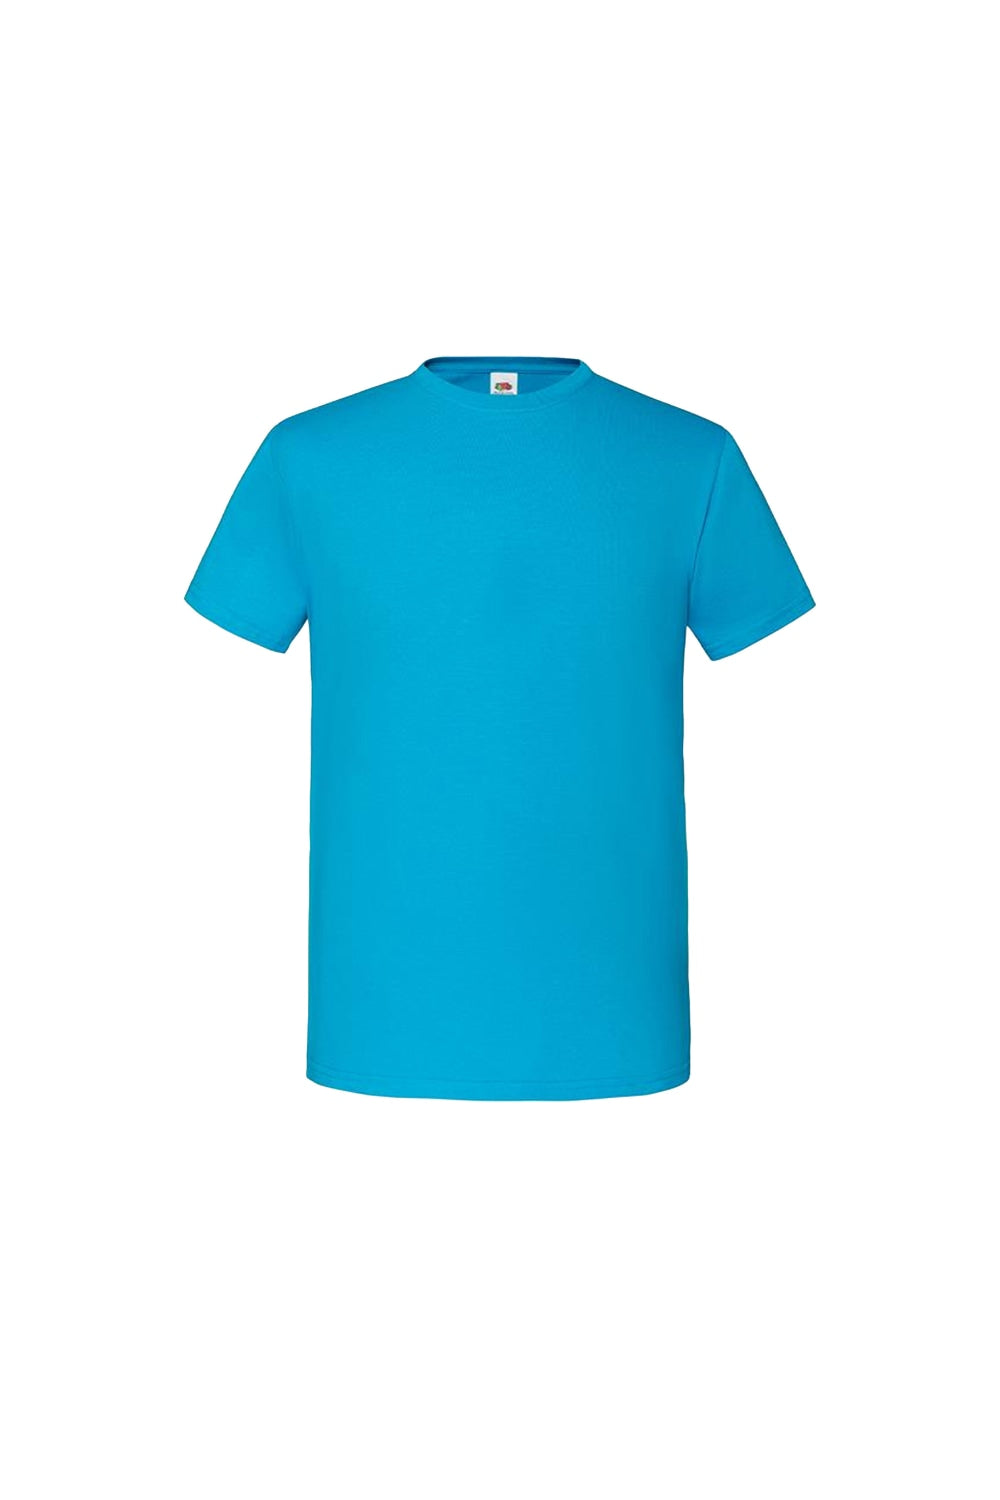 Mens Iconic 150 T-Shirt - Azure Blue